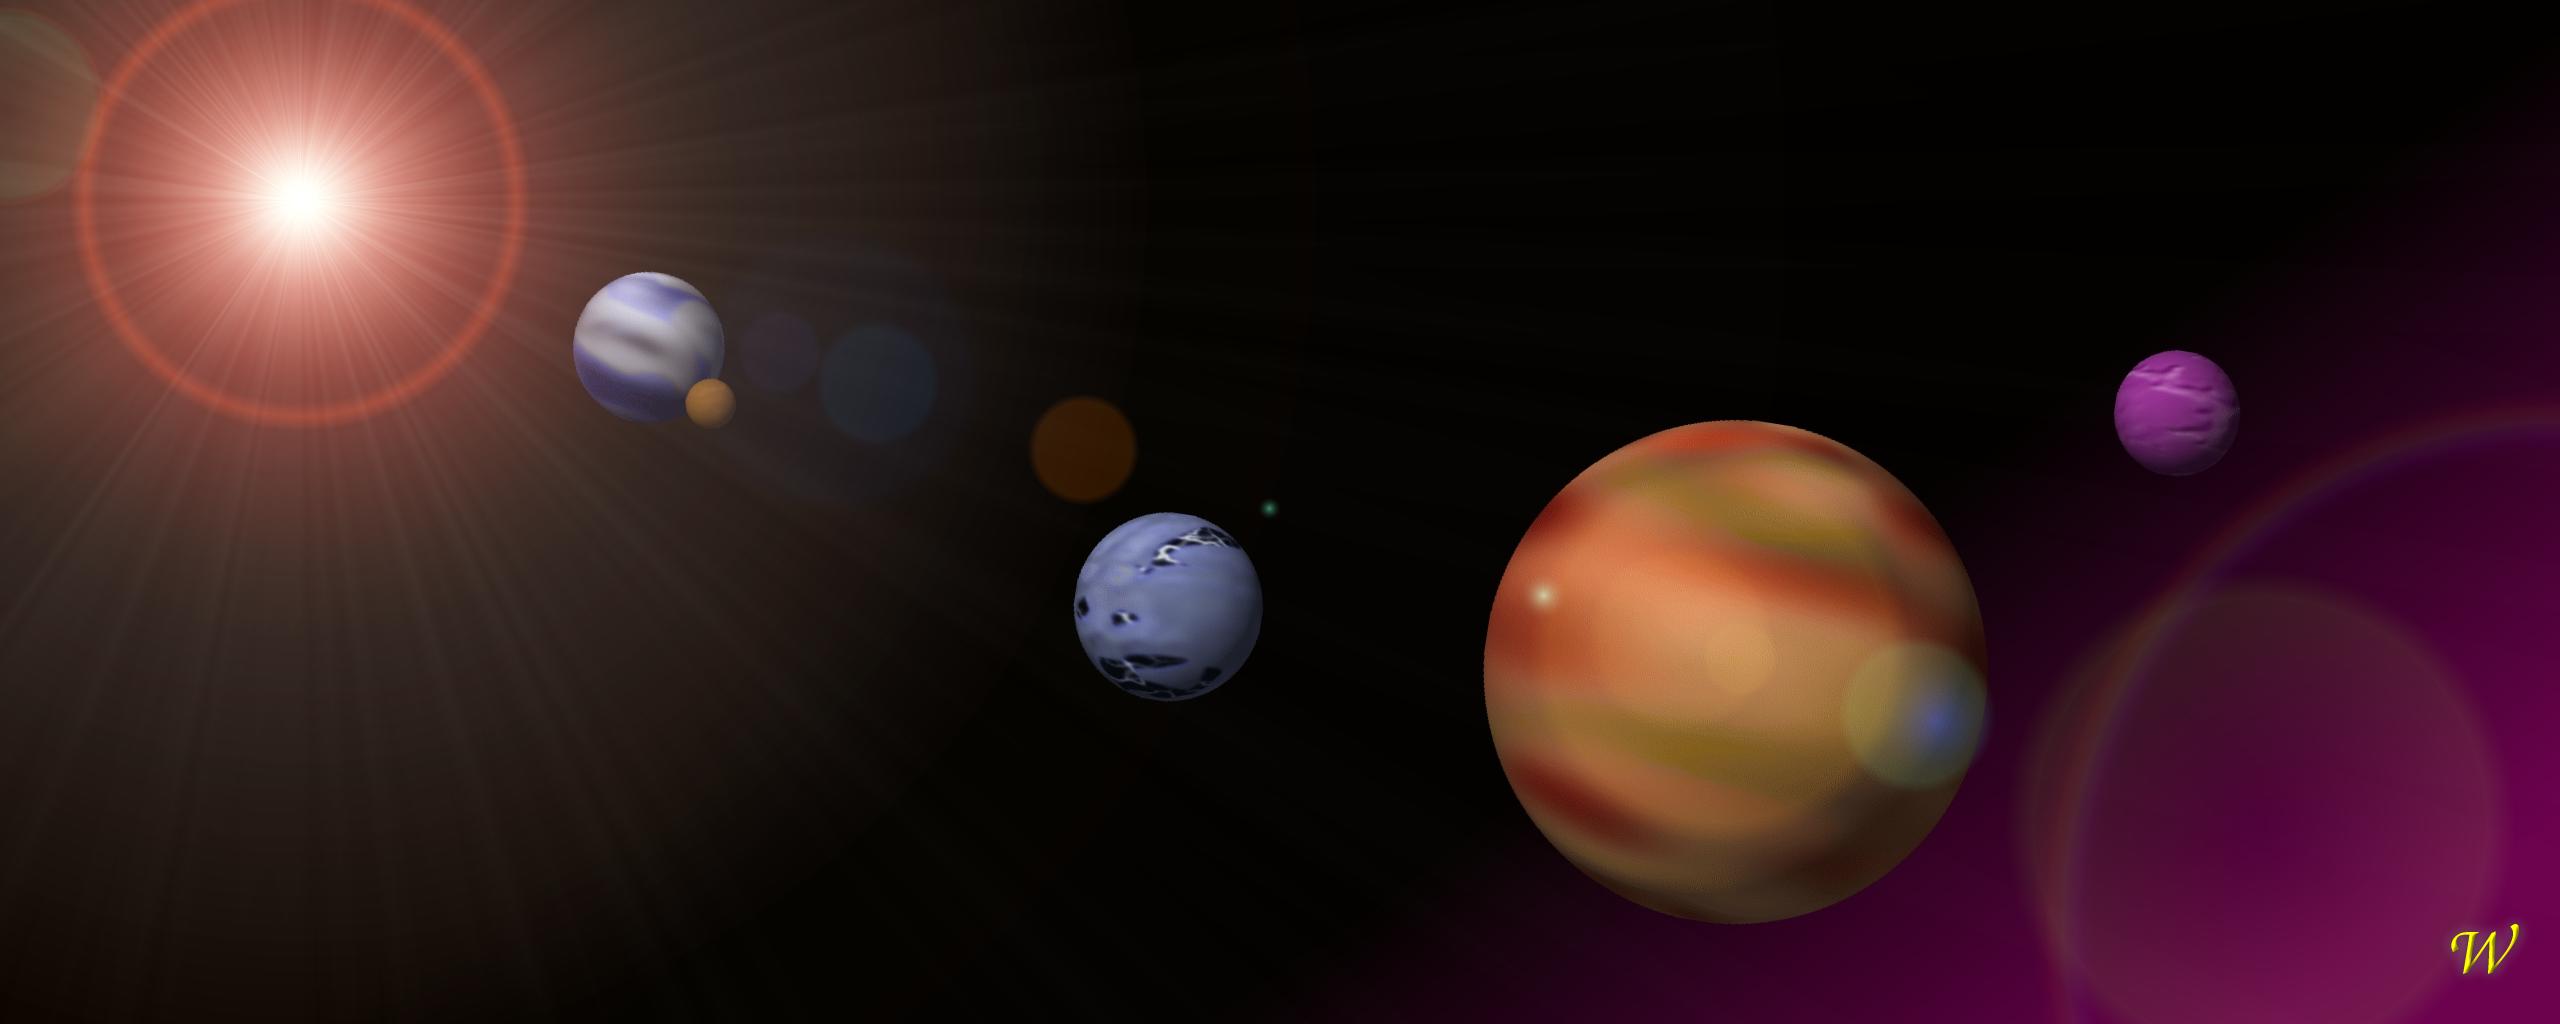 solar system planets 001 HD Wallpaper 2560x1024